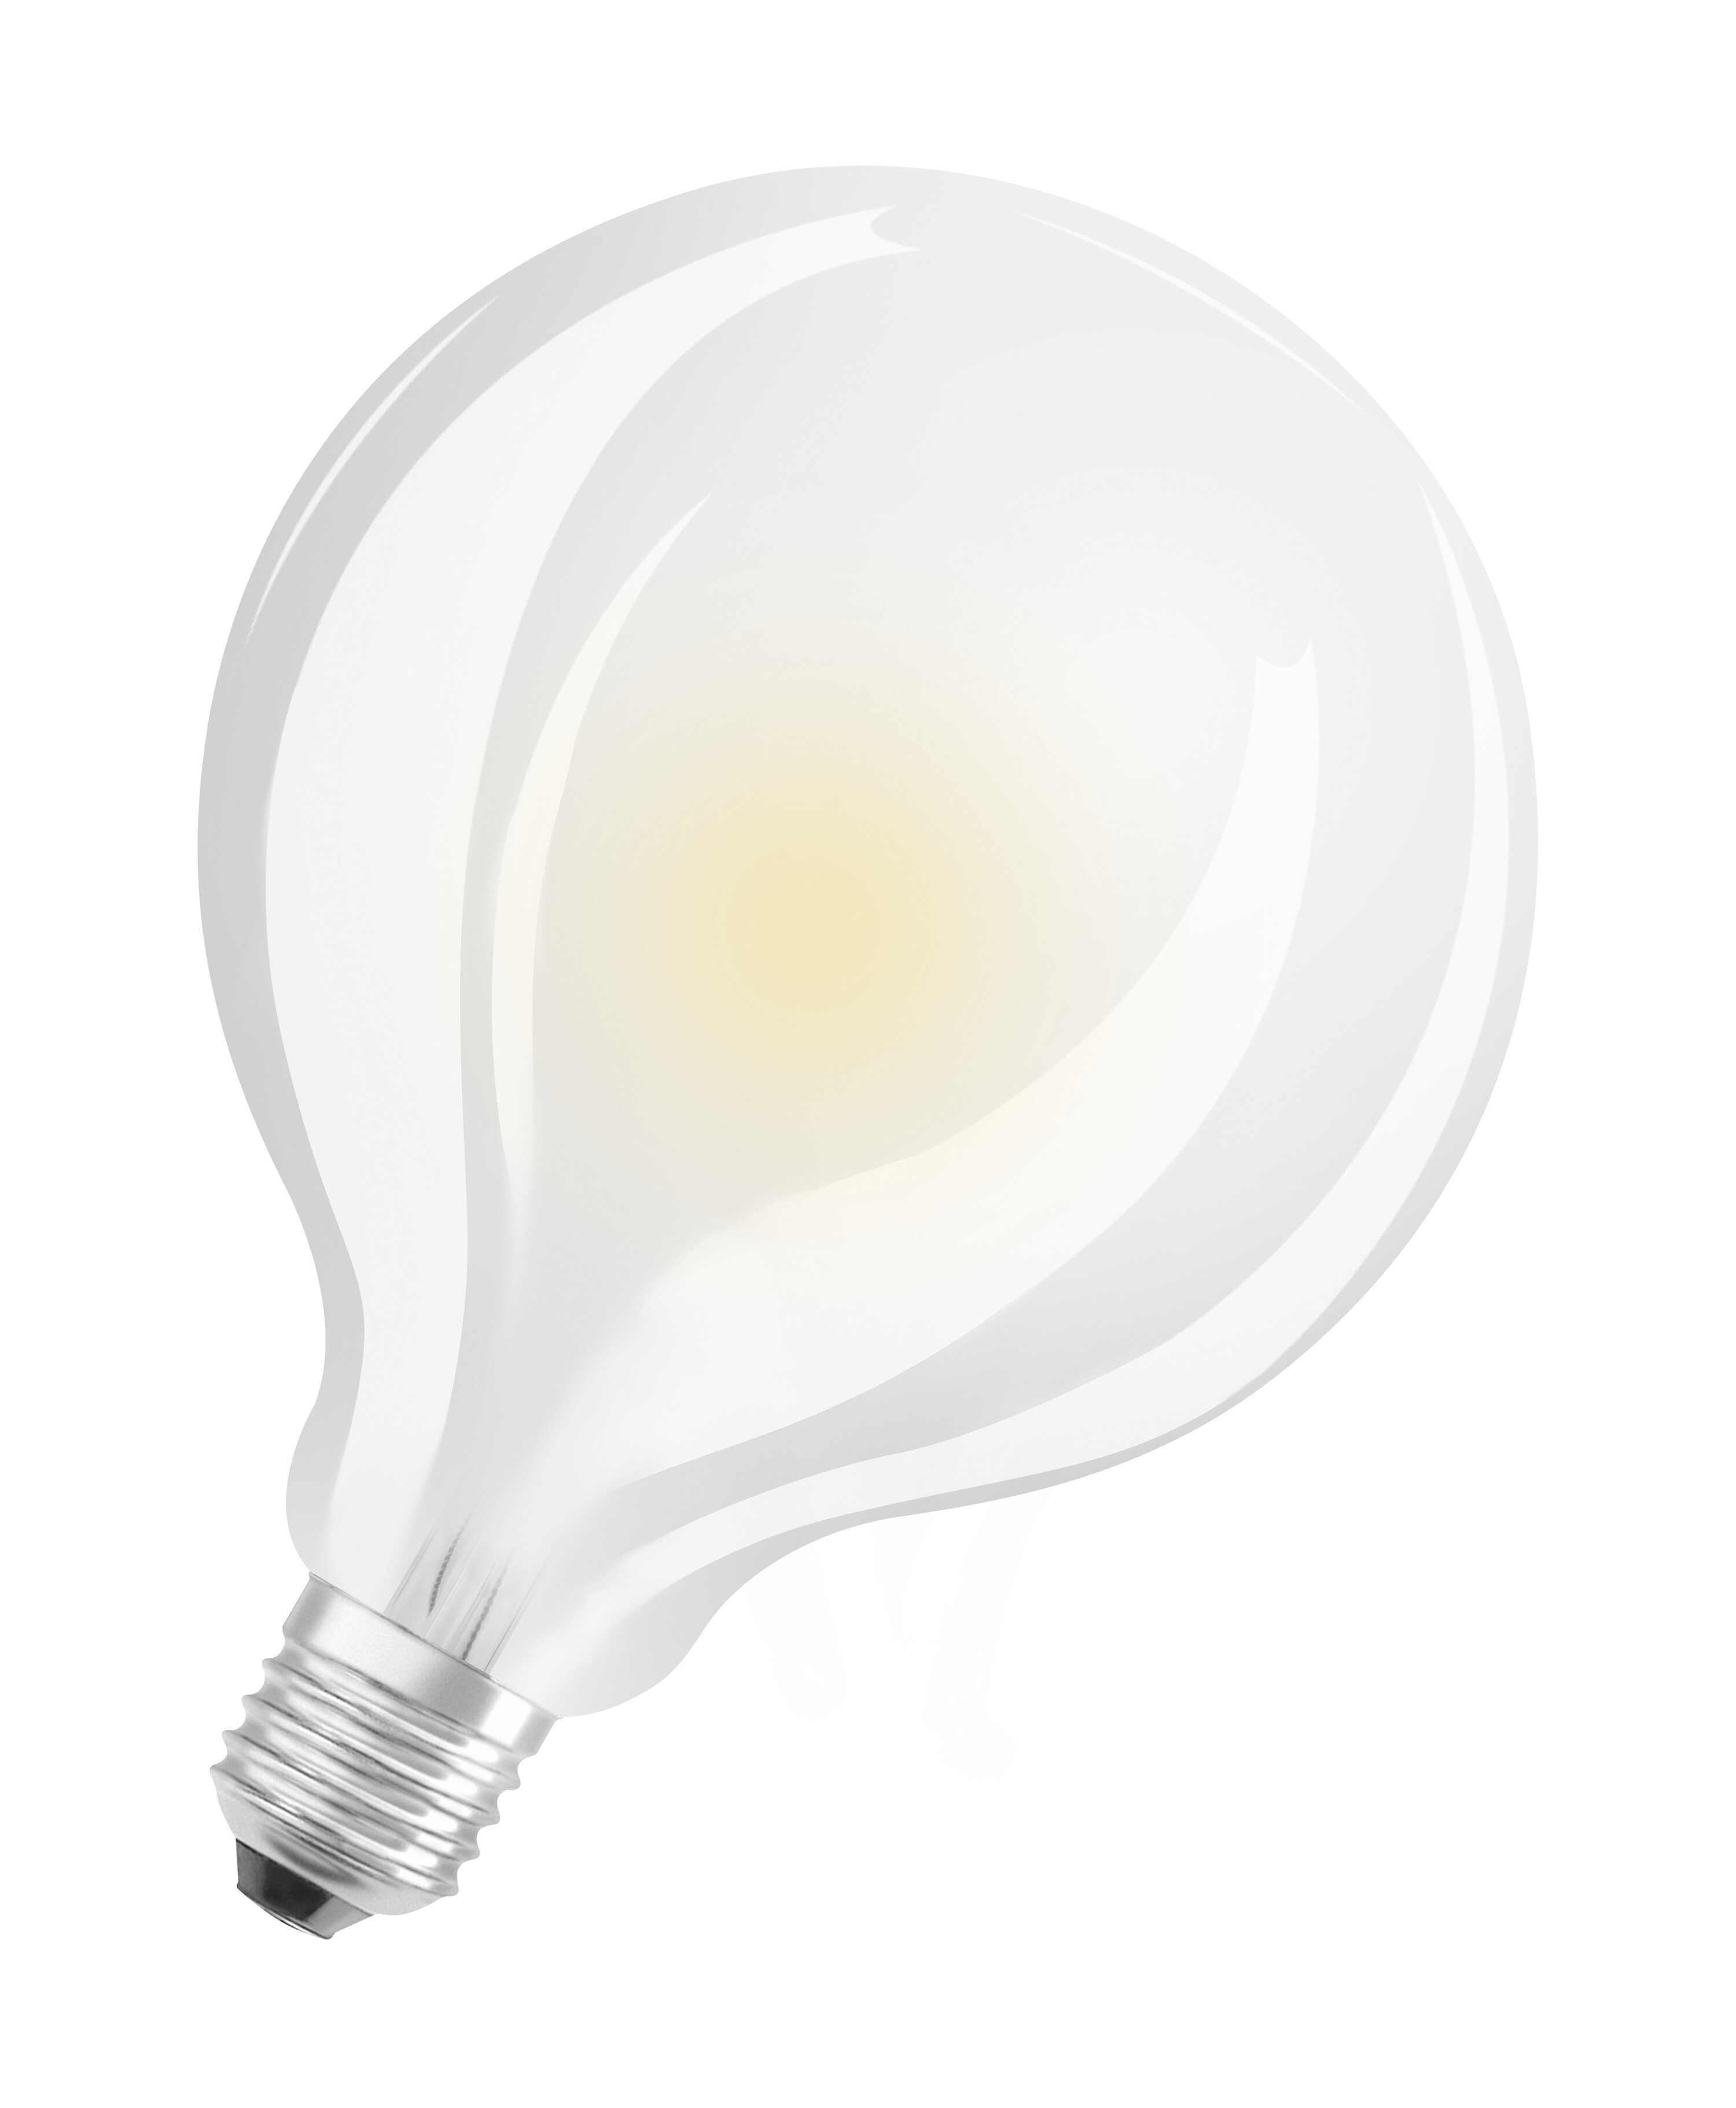 OSRAM  LED lumen Lampe LED CLASSIC Retrofit 1521 GLOBE95 Kaltweiß